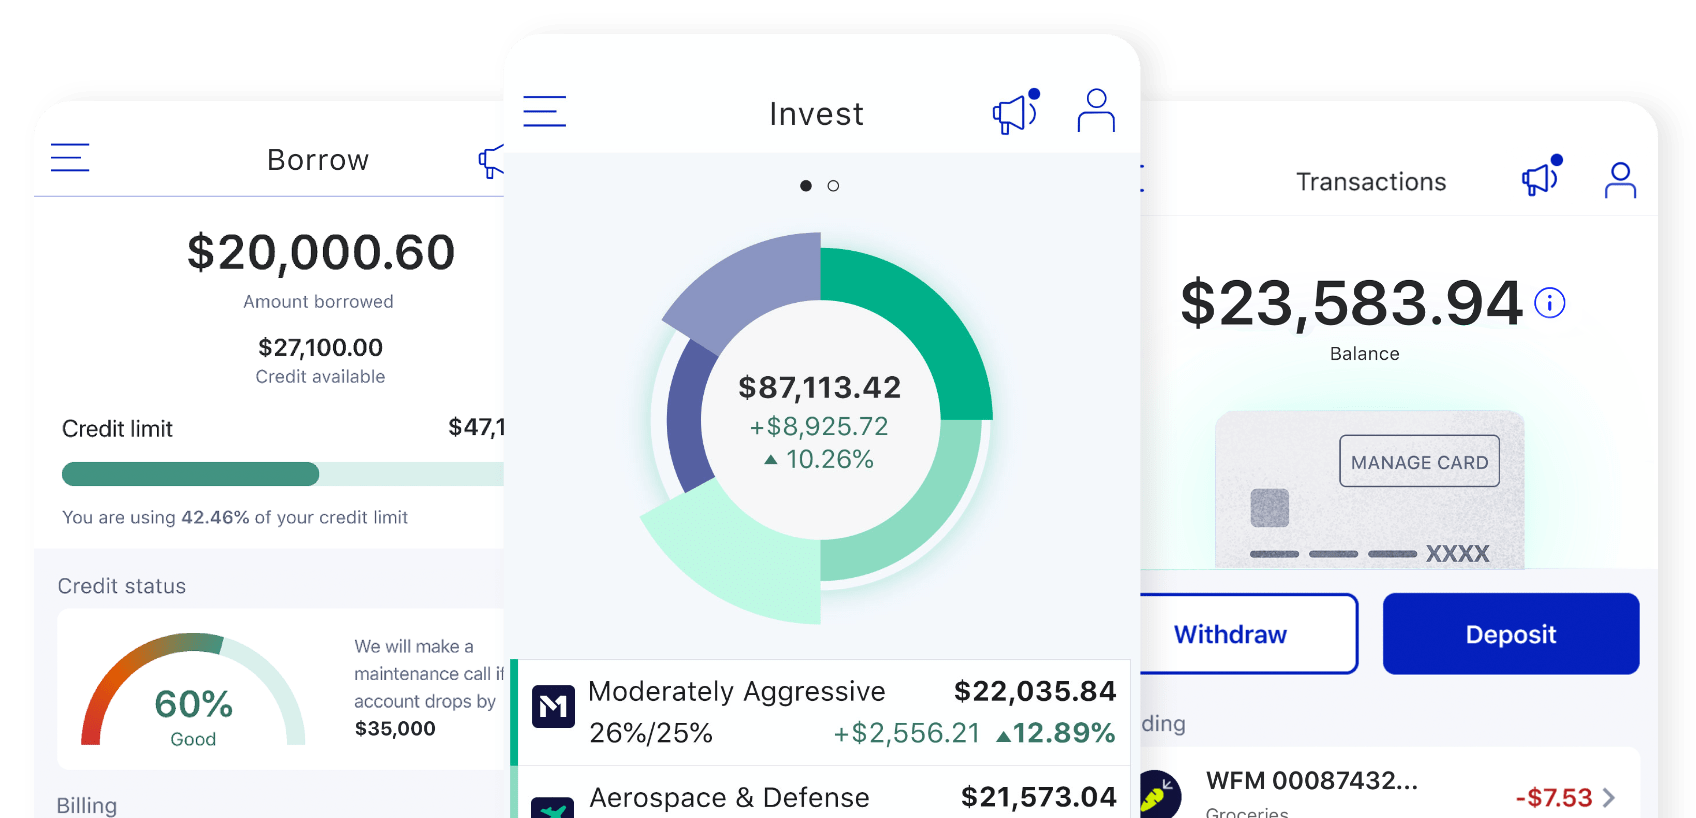 M1 Finance App